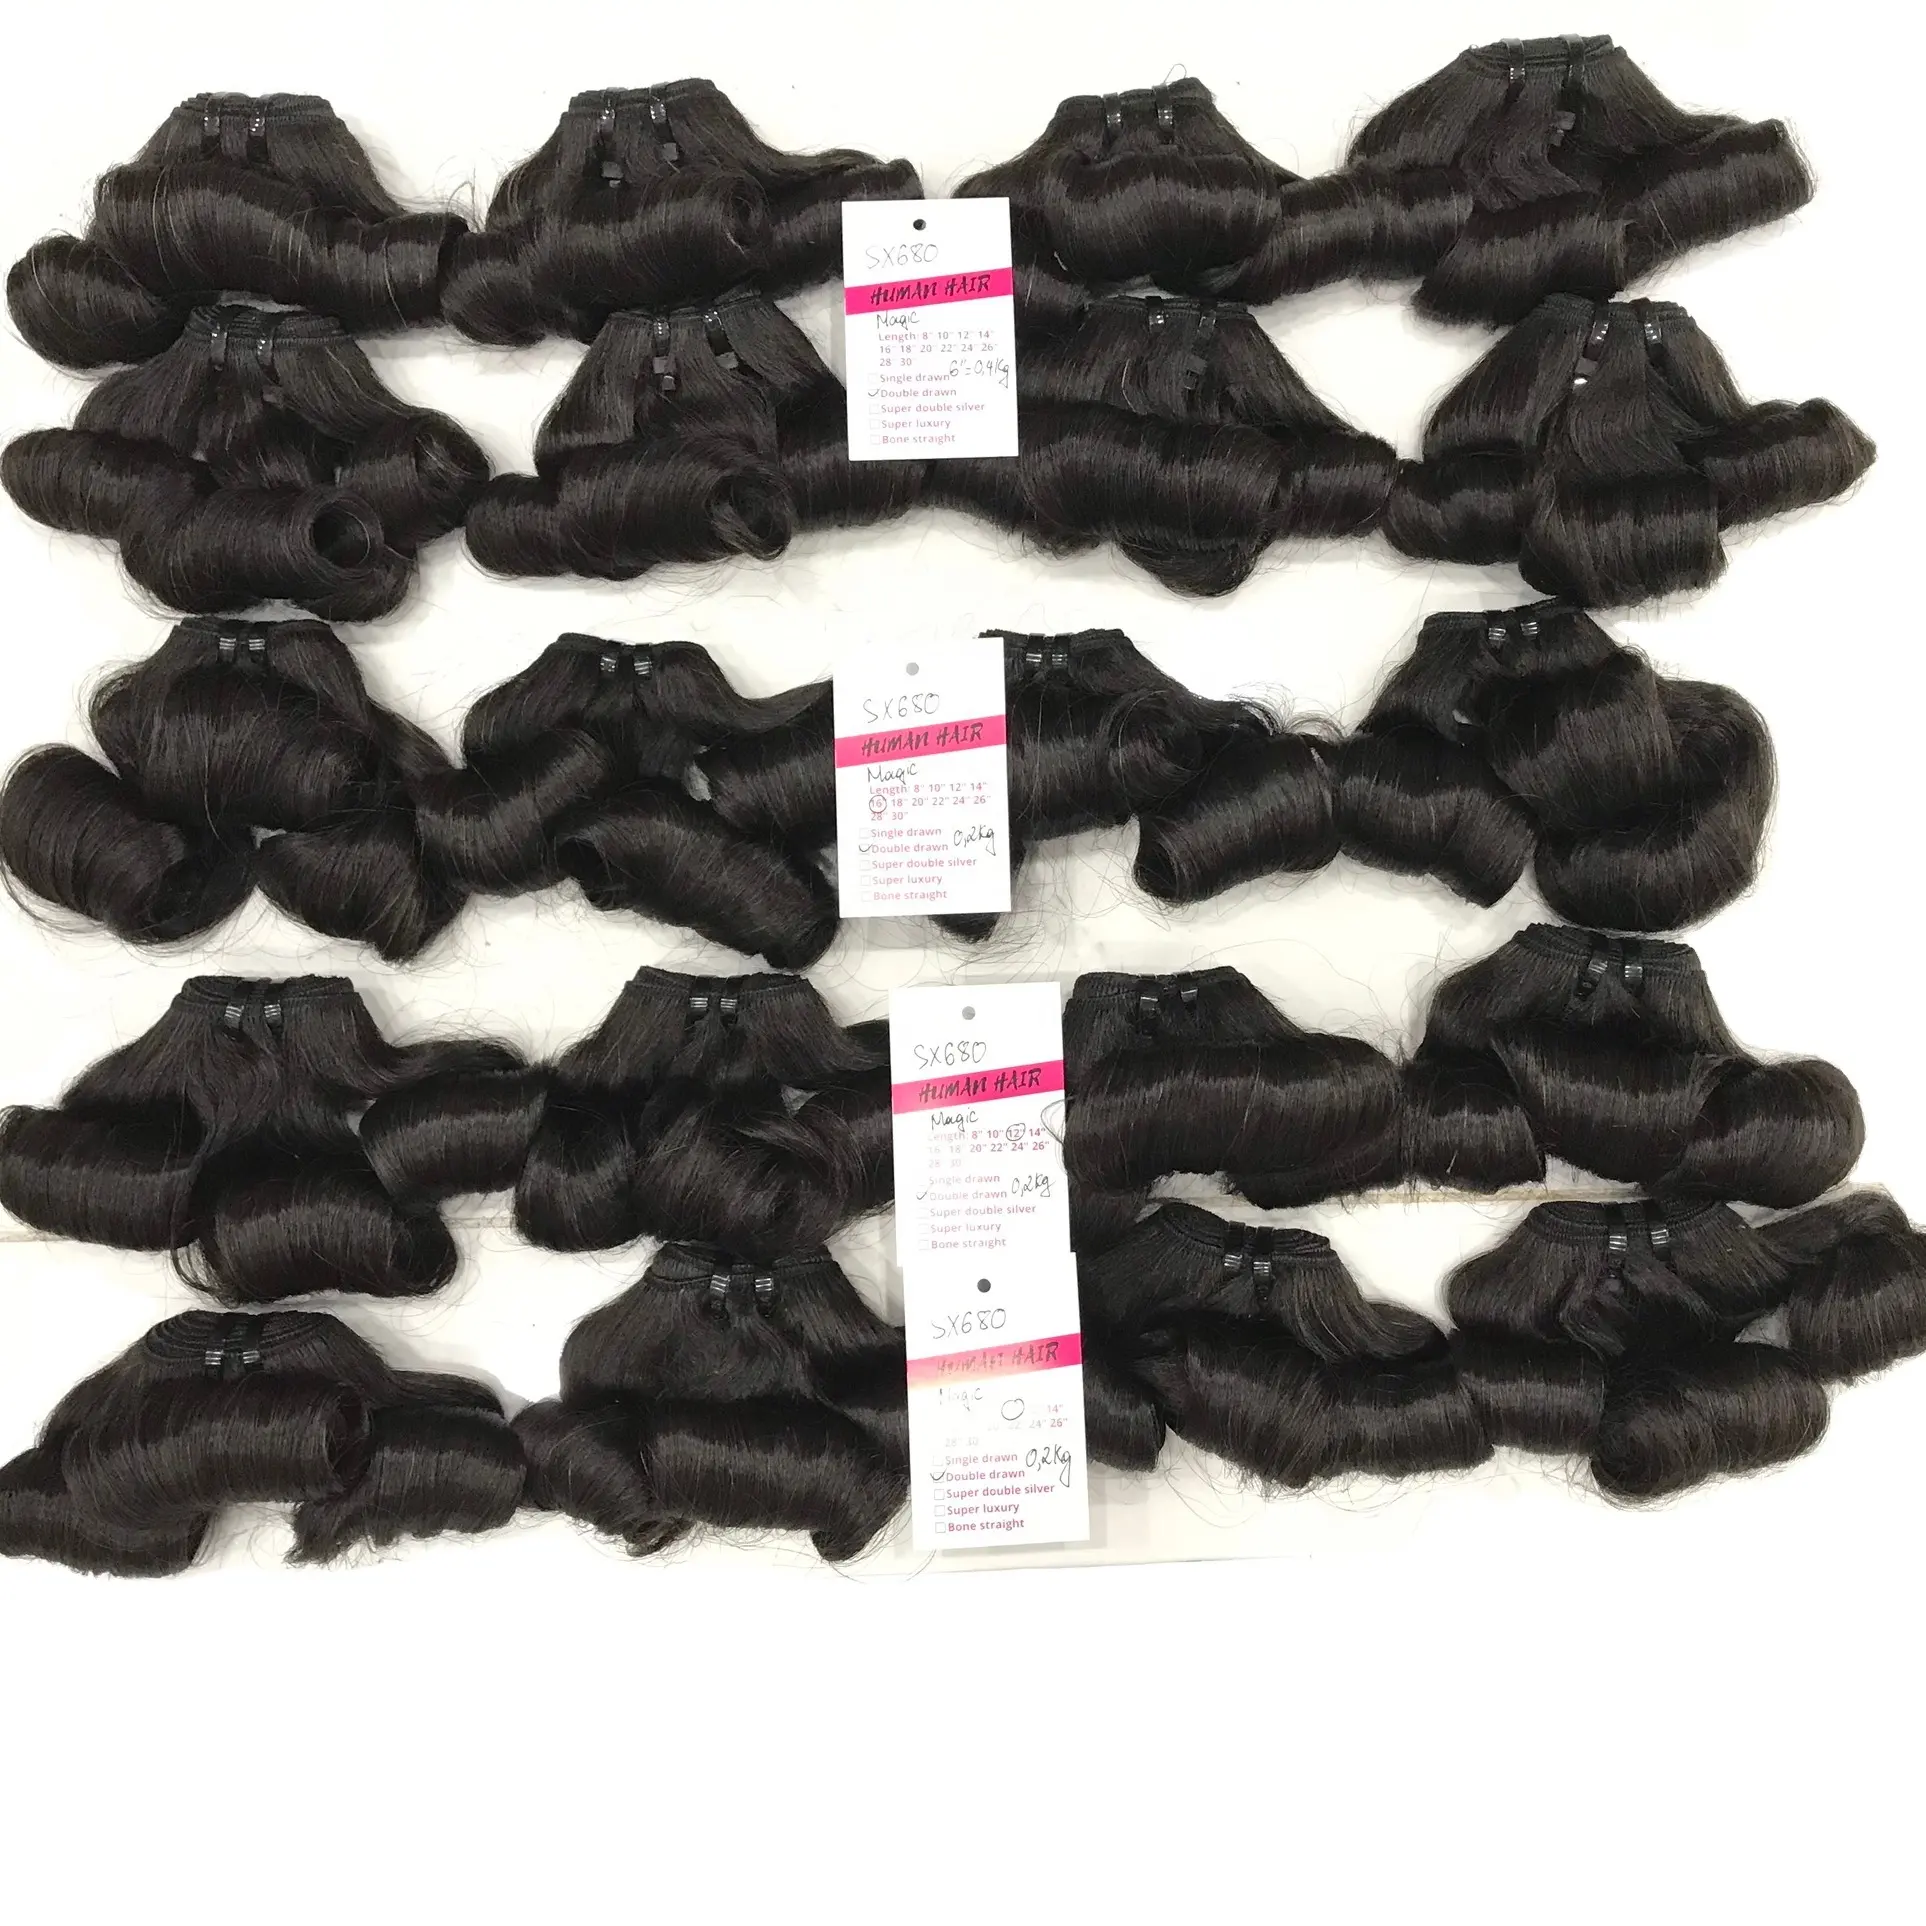 Wholesales Natural Color Cuticle aligned short curly raw hair Cheap curly human hair weaving